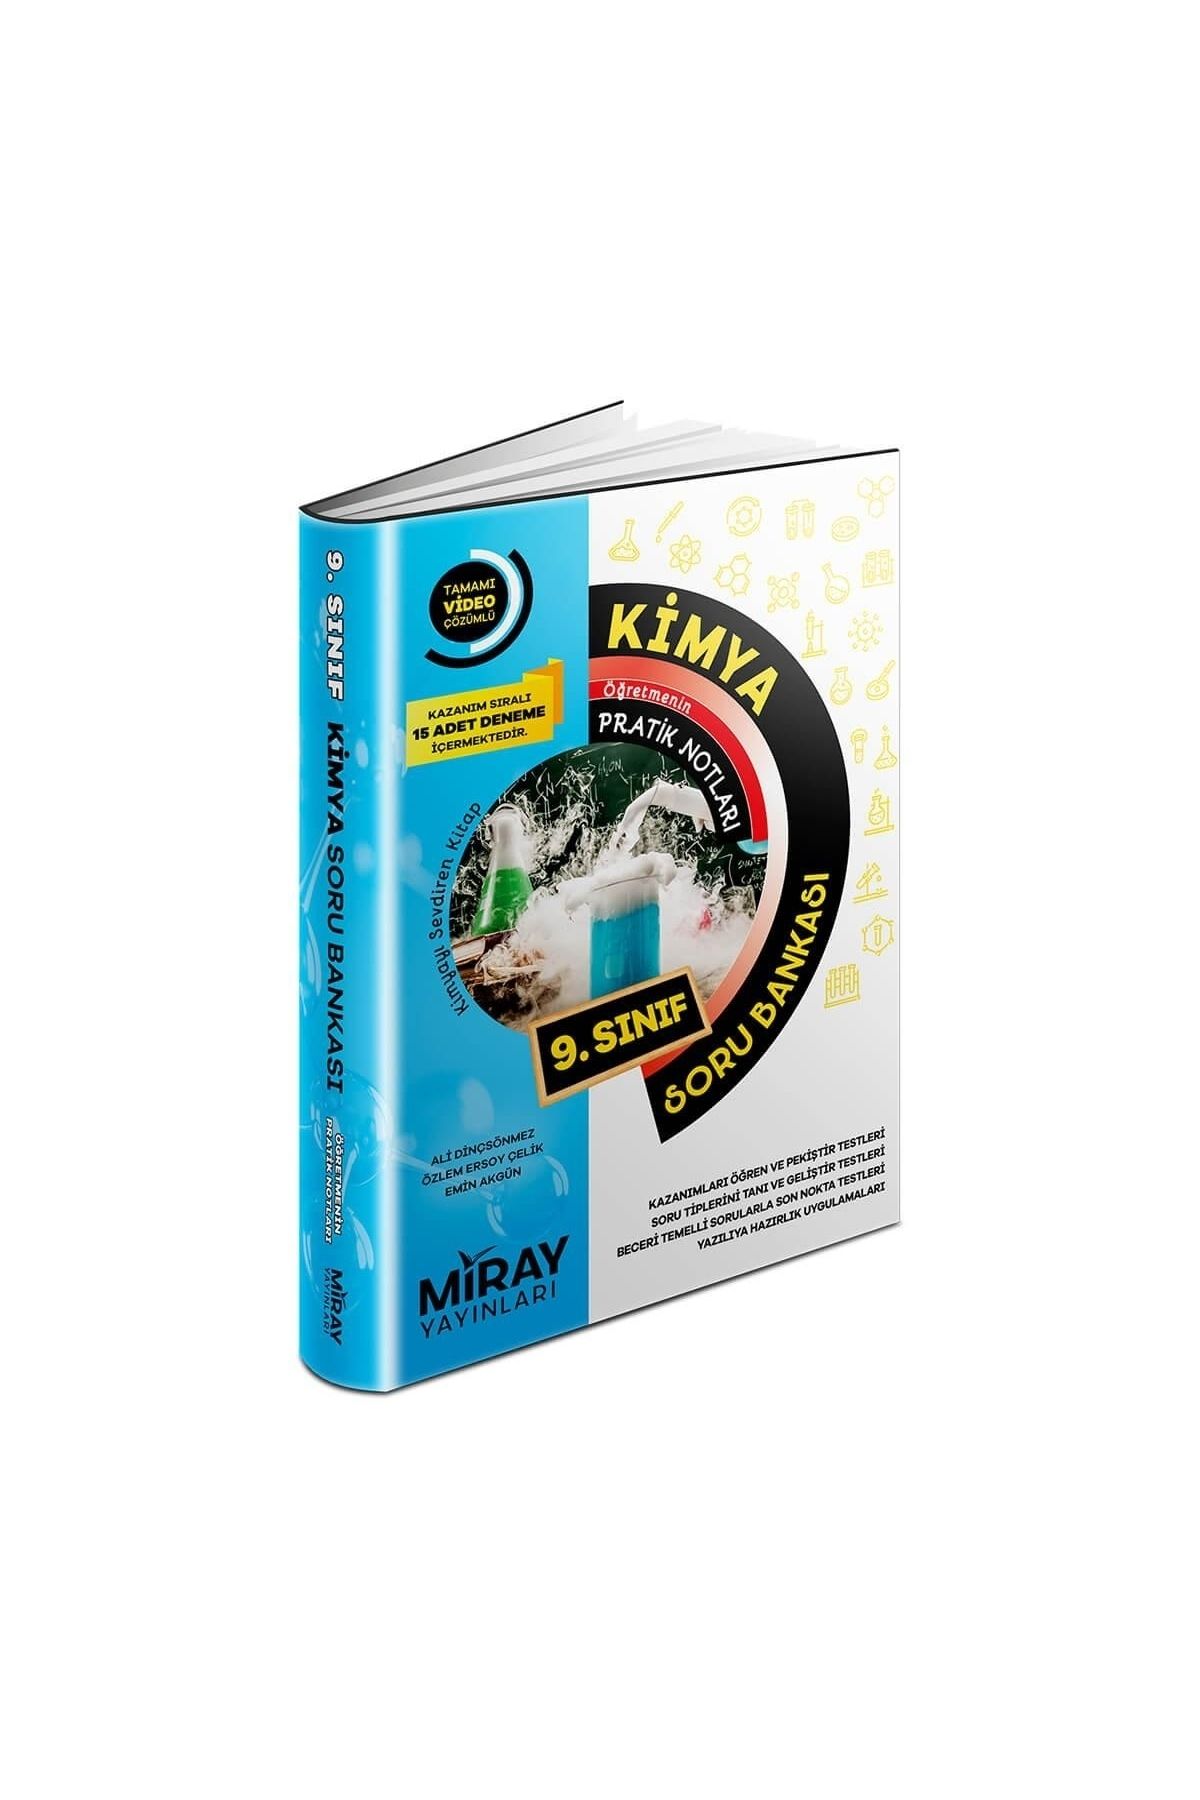 Miray Yayınları 9.sınıf Miray Kimya Konu Özetli Soru Bankası (tamamı Video Çözümlü)